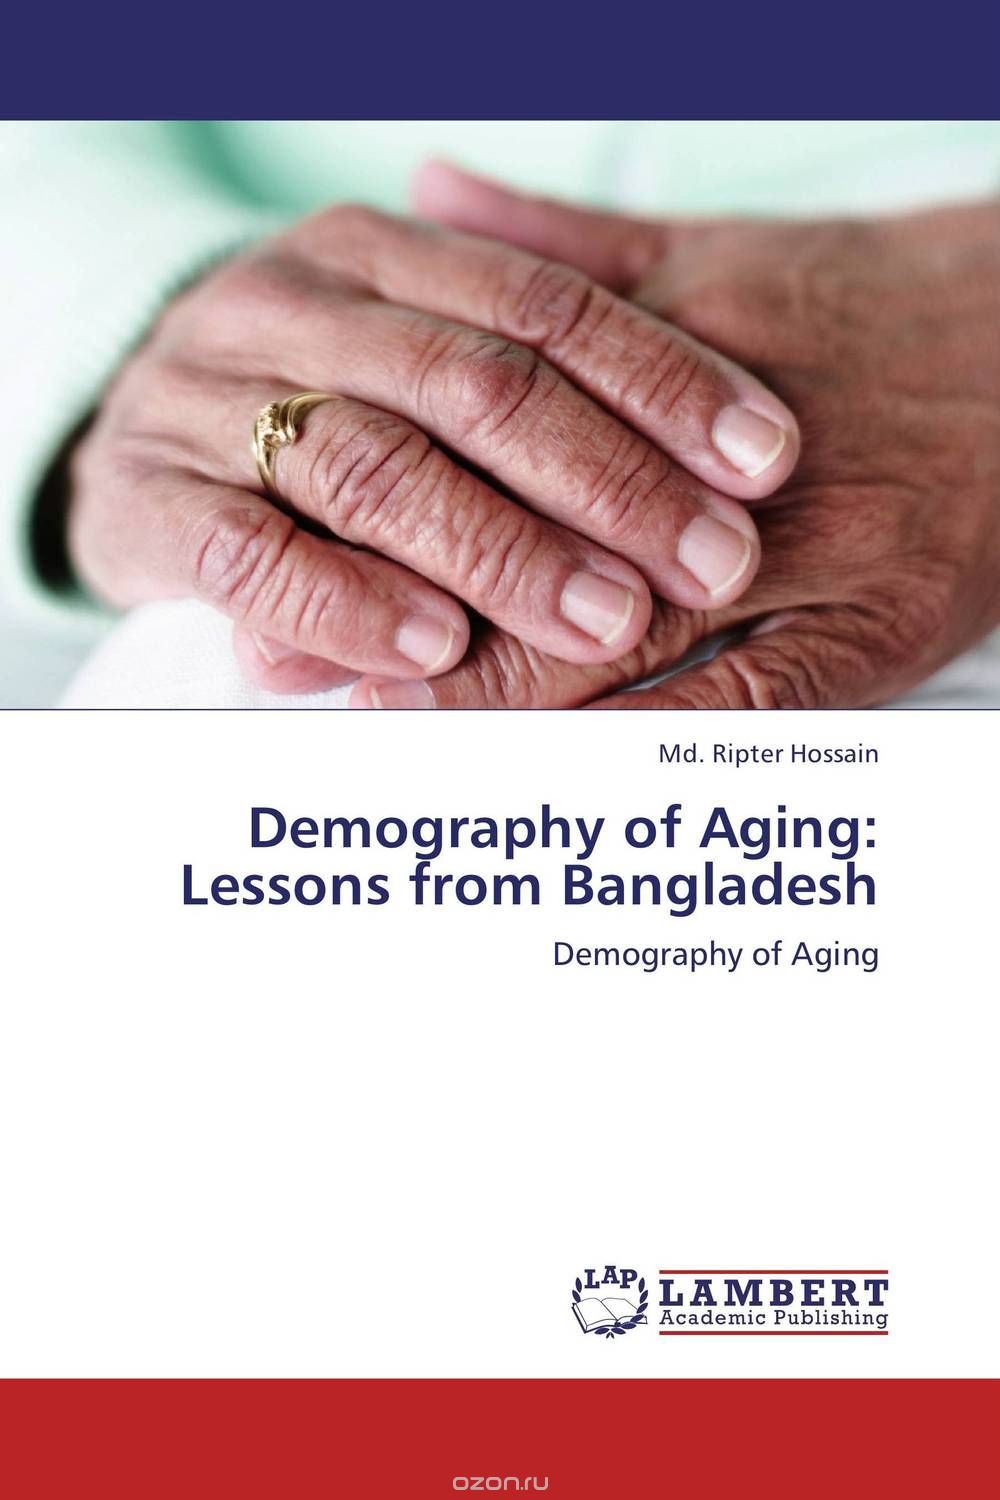 Скачать книгу "Demography of Aging: Lessons from Bangladesh"